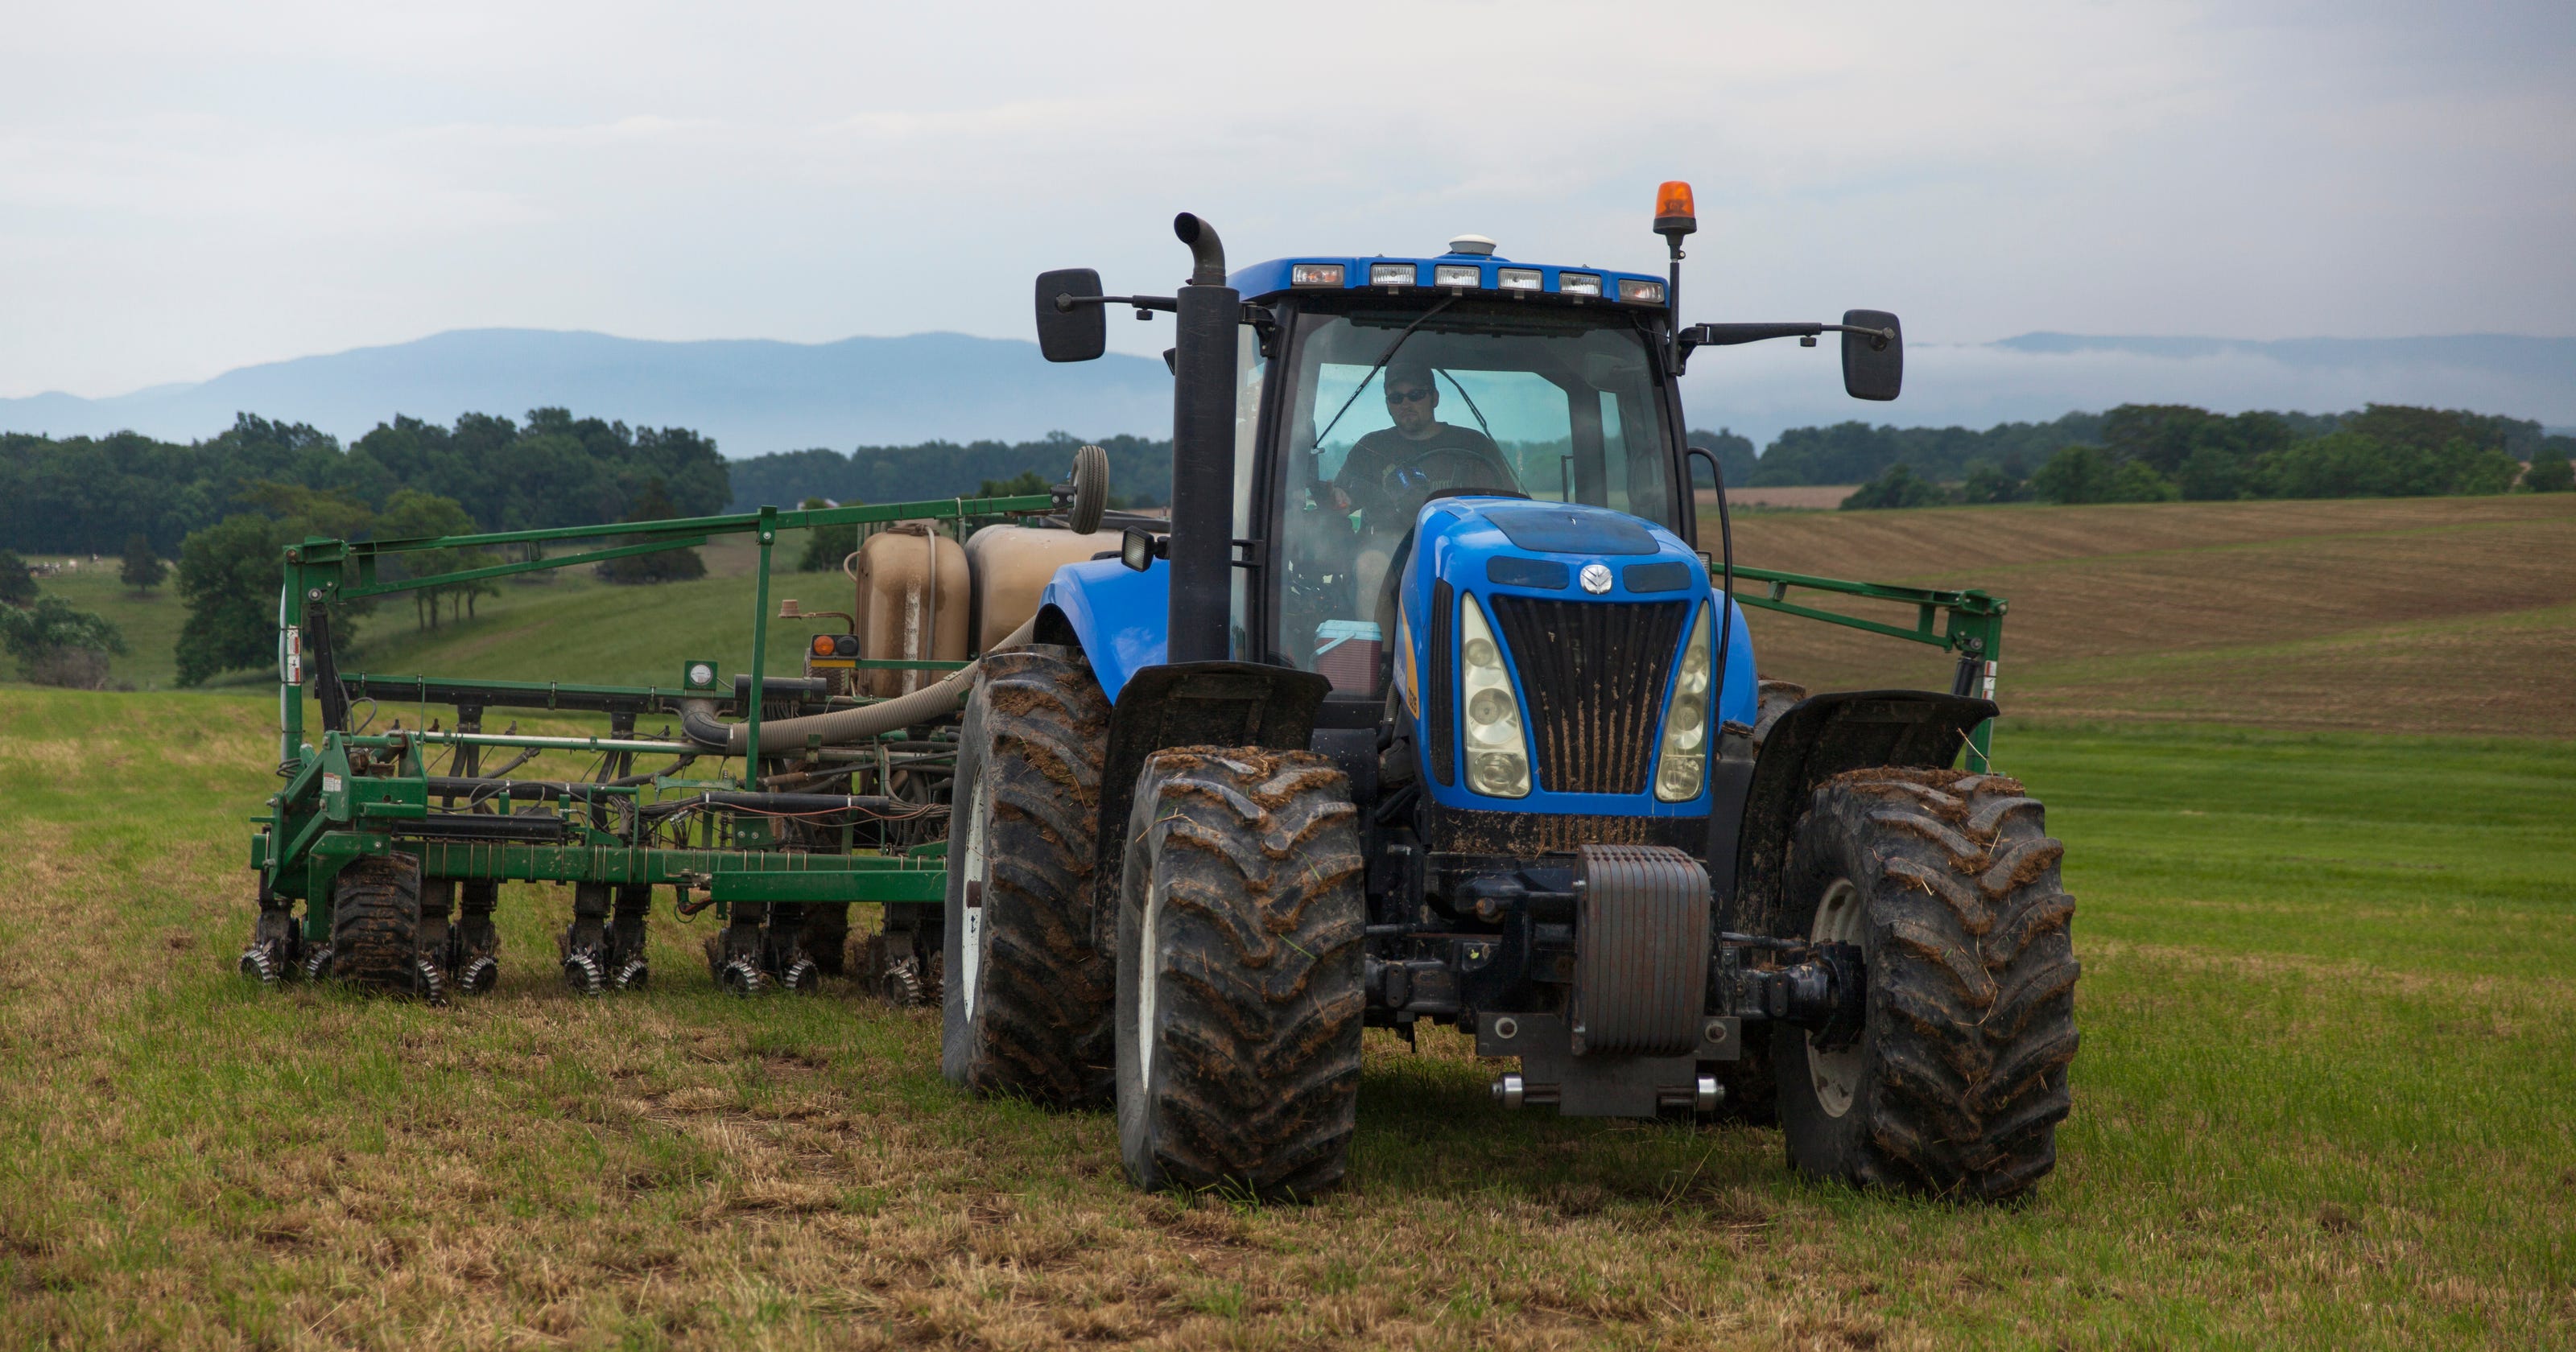 Technology makes farms more efficient.